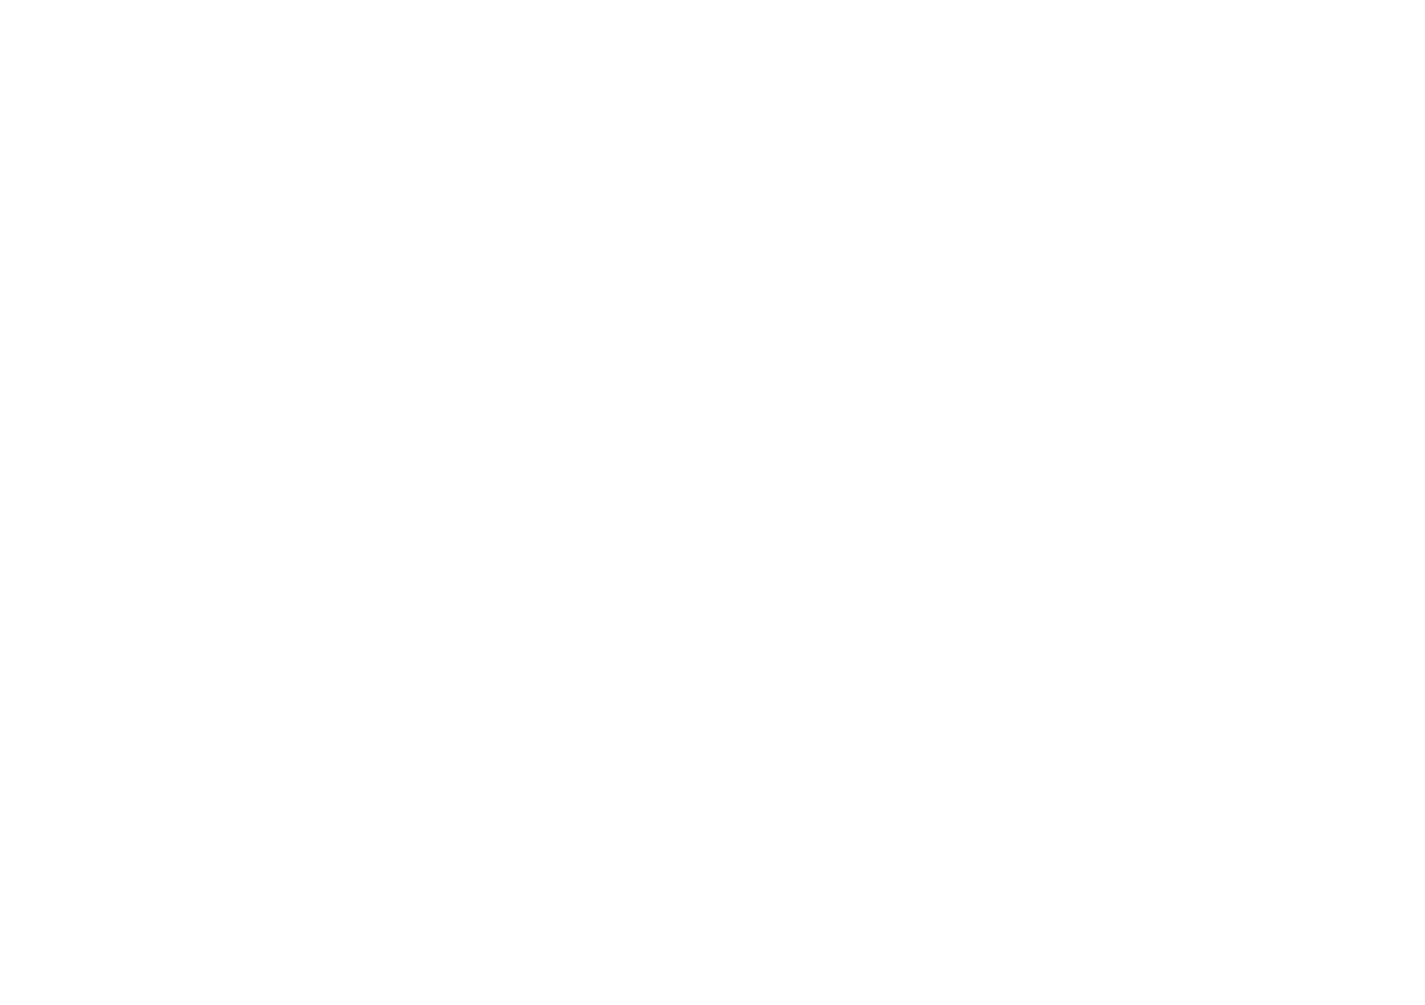 Rterior Studio